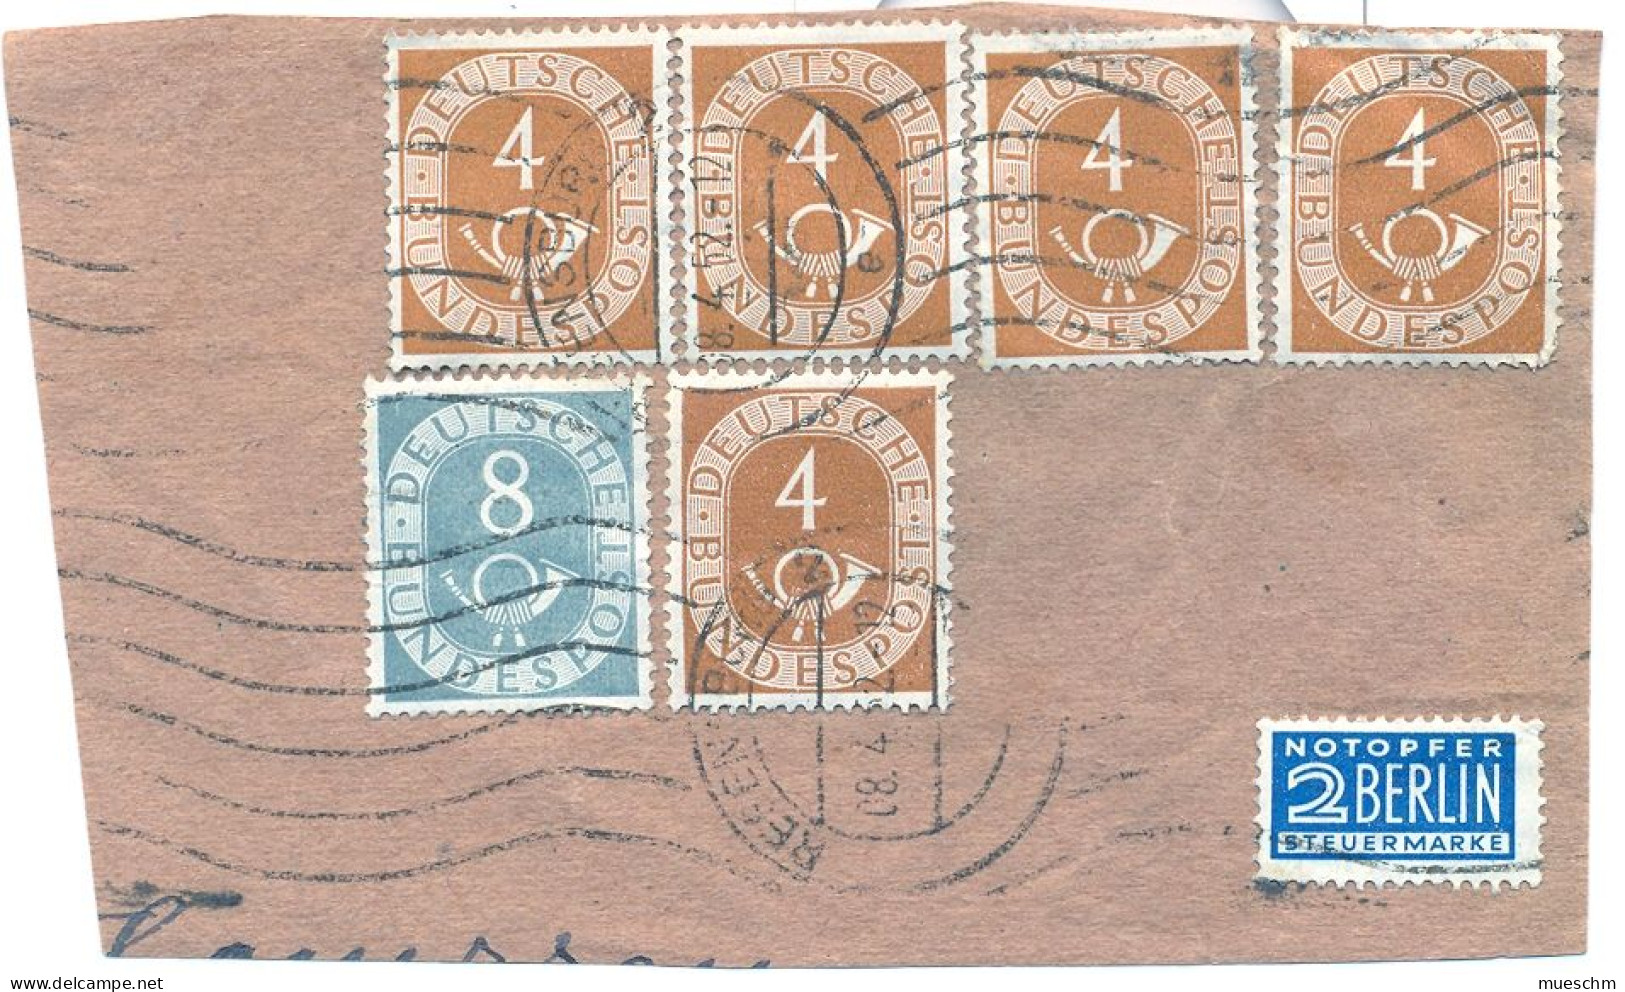 Bundesrepublik, 1952, Briefstück Mit 5xMi.124 (Posthorn 4Pfg.)+1xMi.Nr.127 (8Pfg.)+Notopfer Berlin (8473E) - Gebraucht